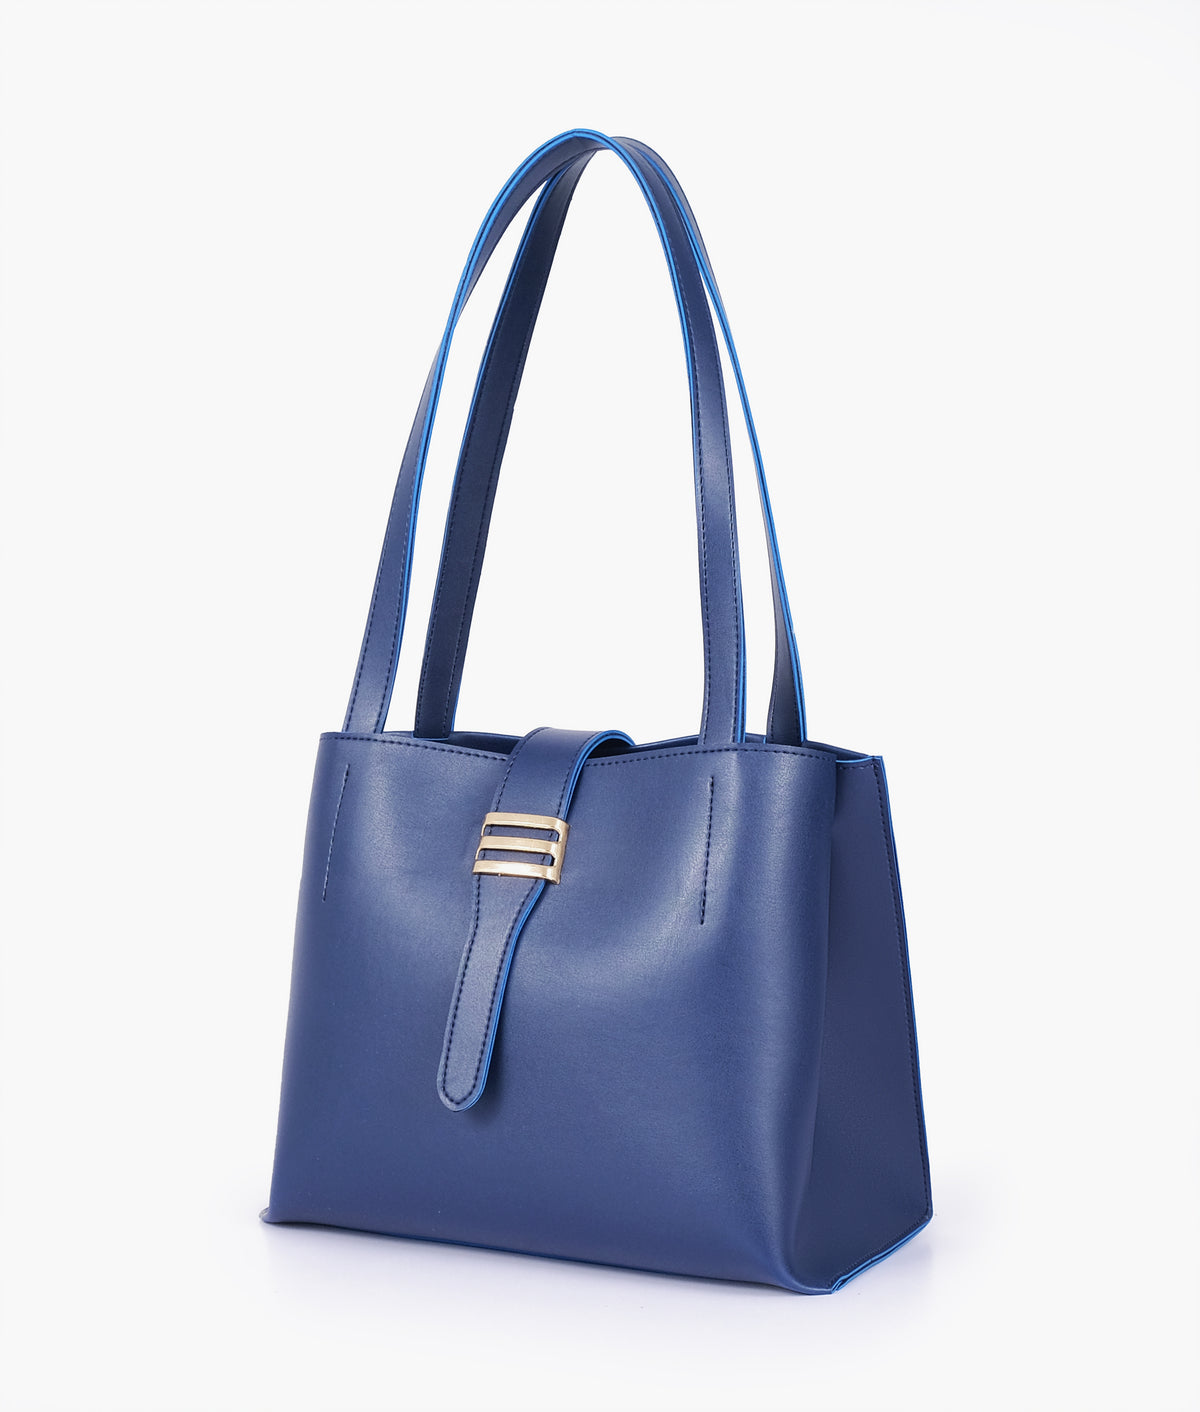 Blue mini tote bag